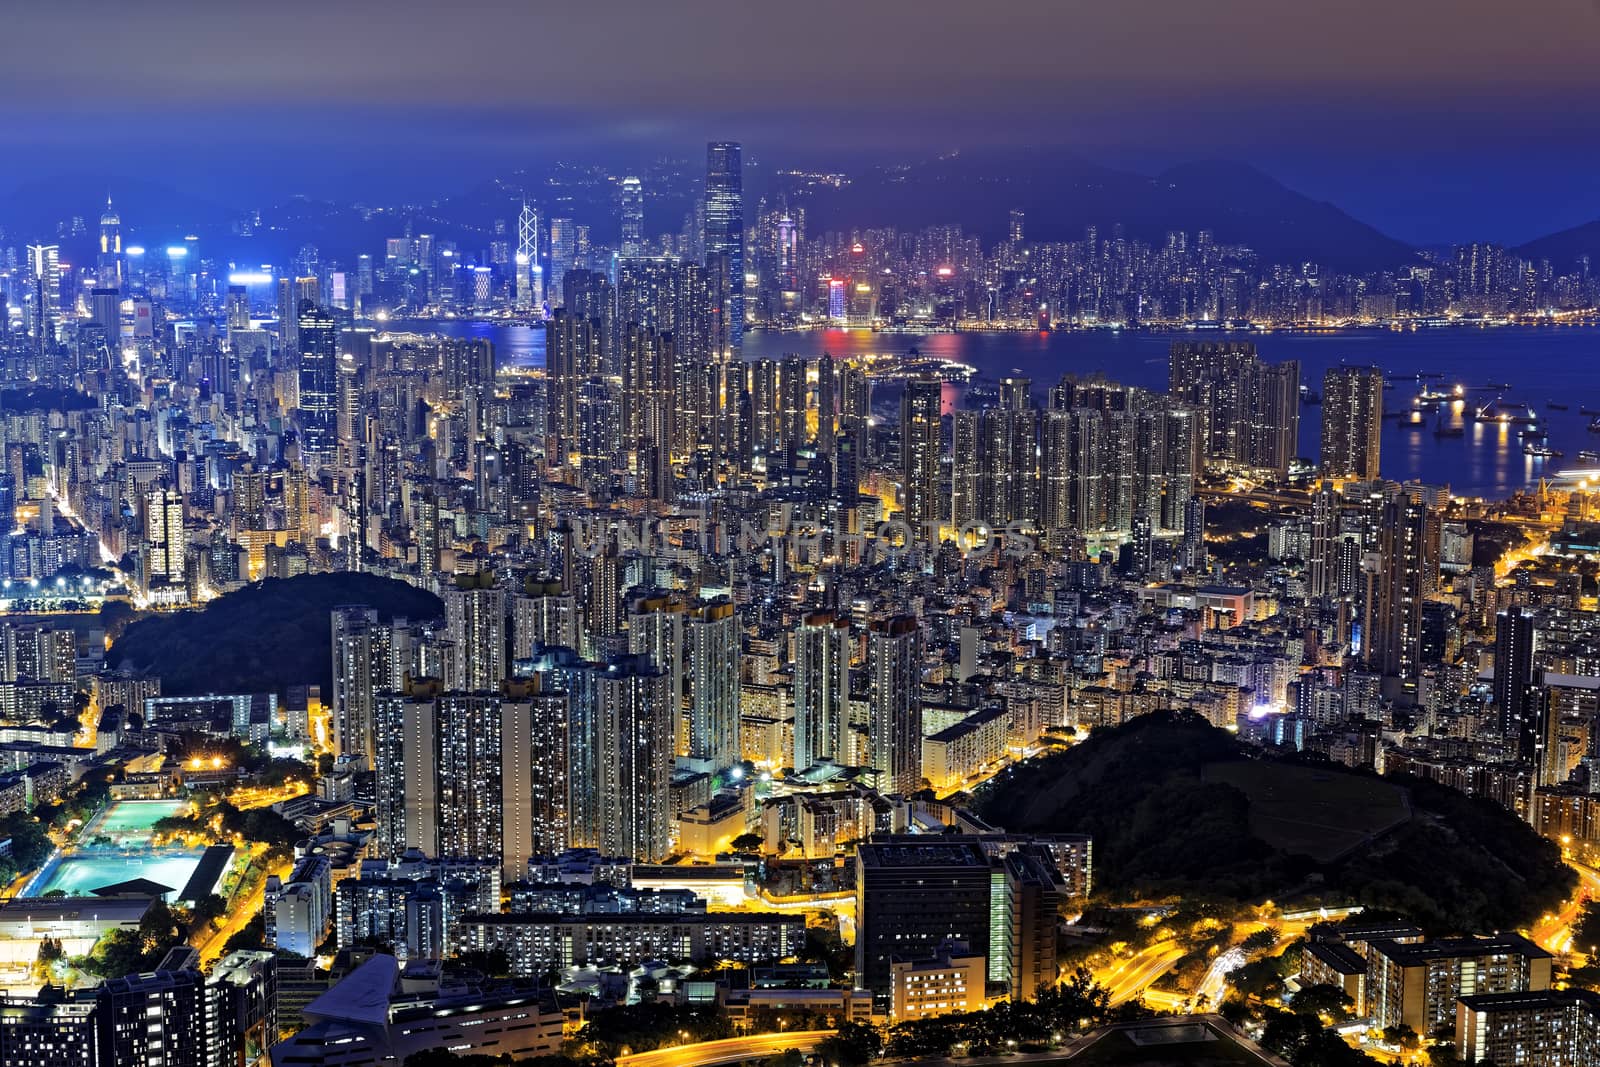 Hong Kong Night by cozyta